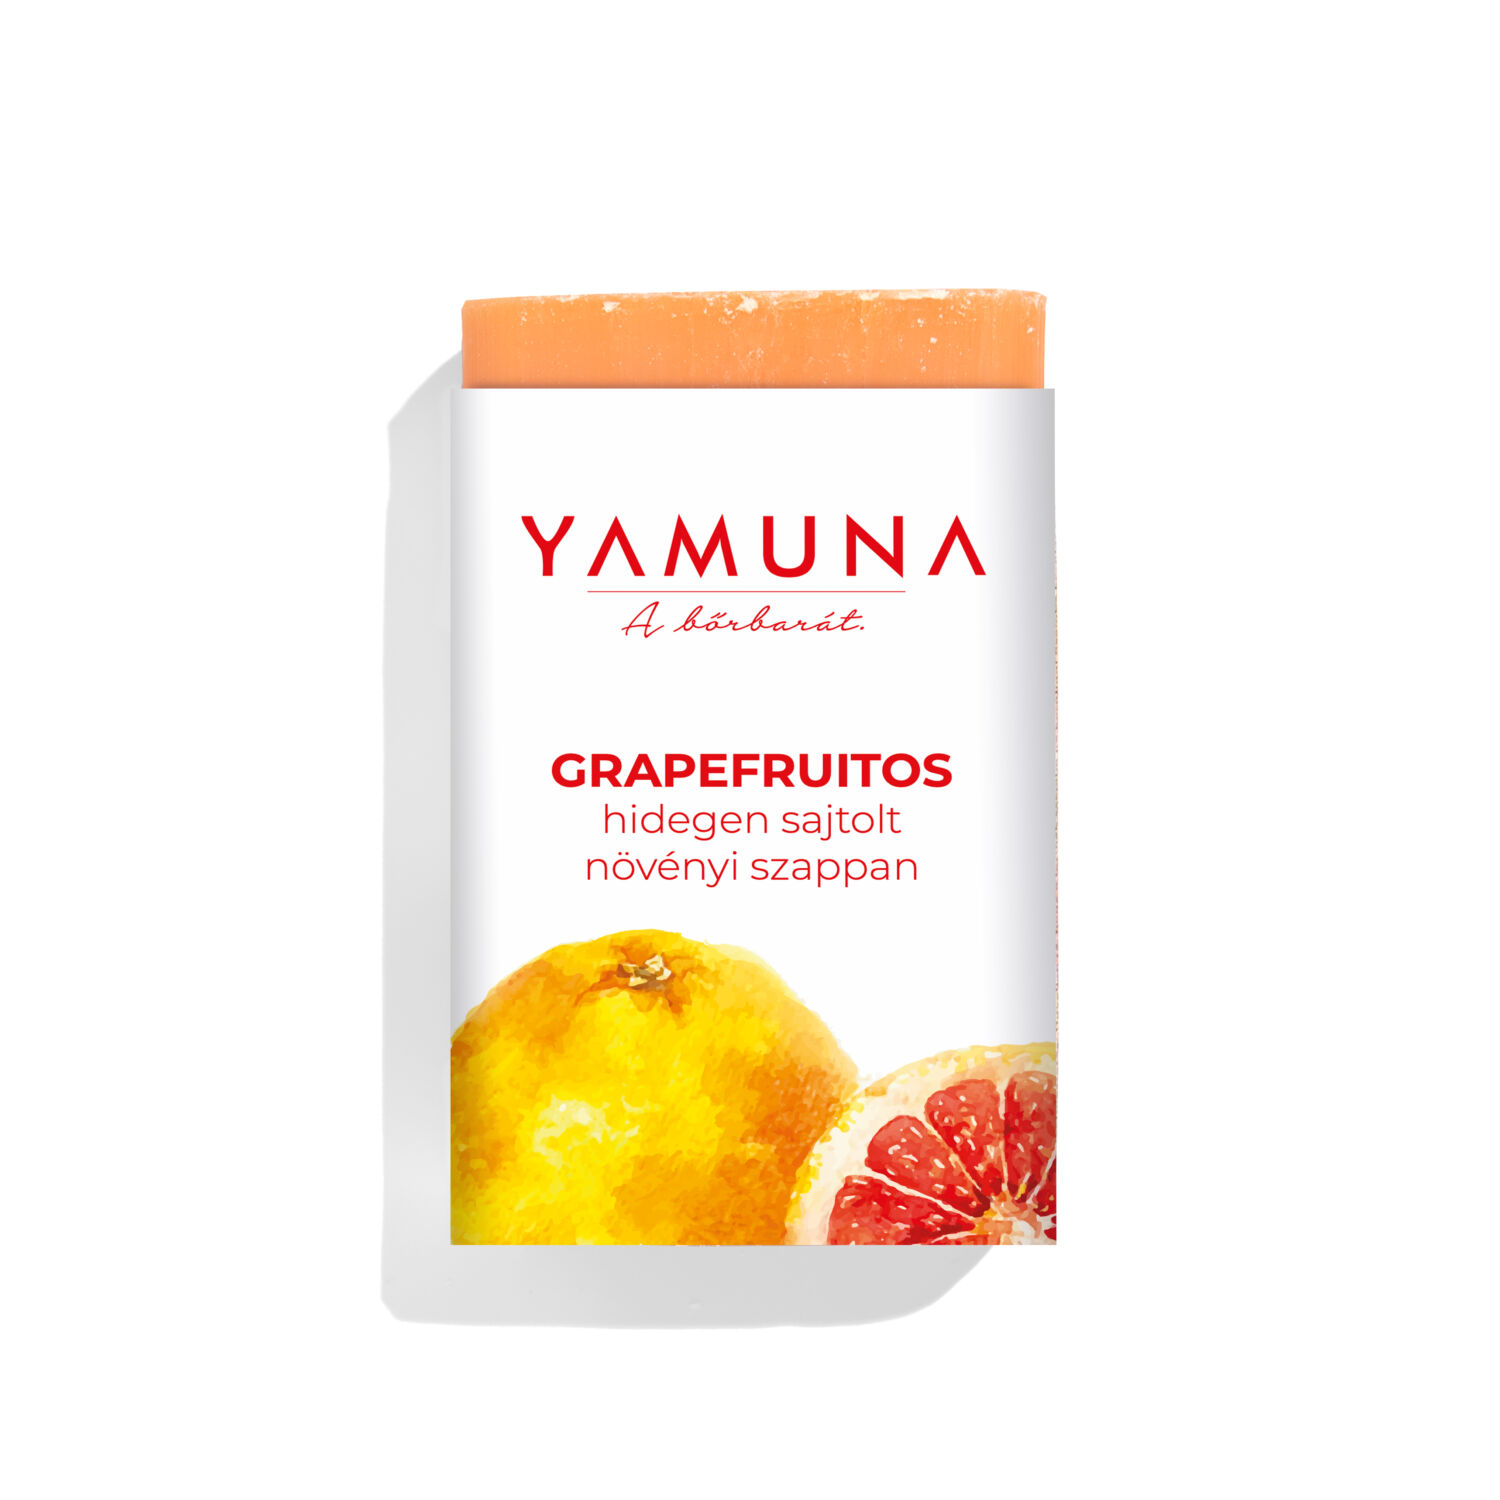 grapefrutios hs sapun grapefruit yamunaromania happytour